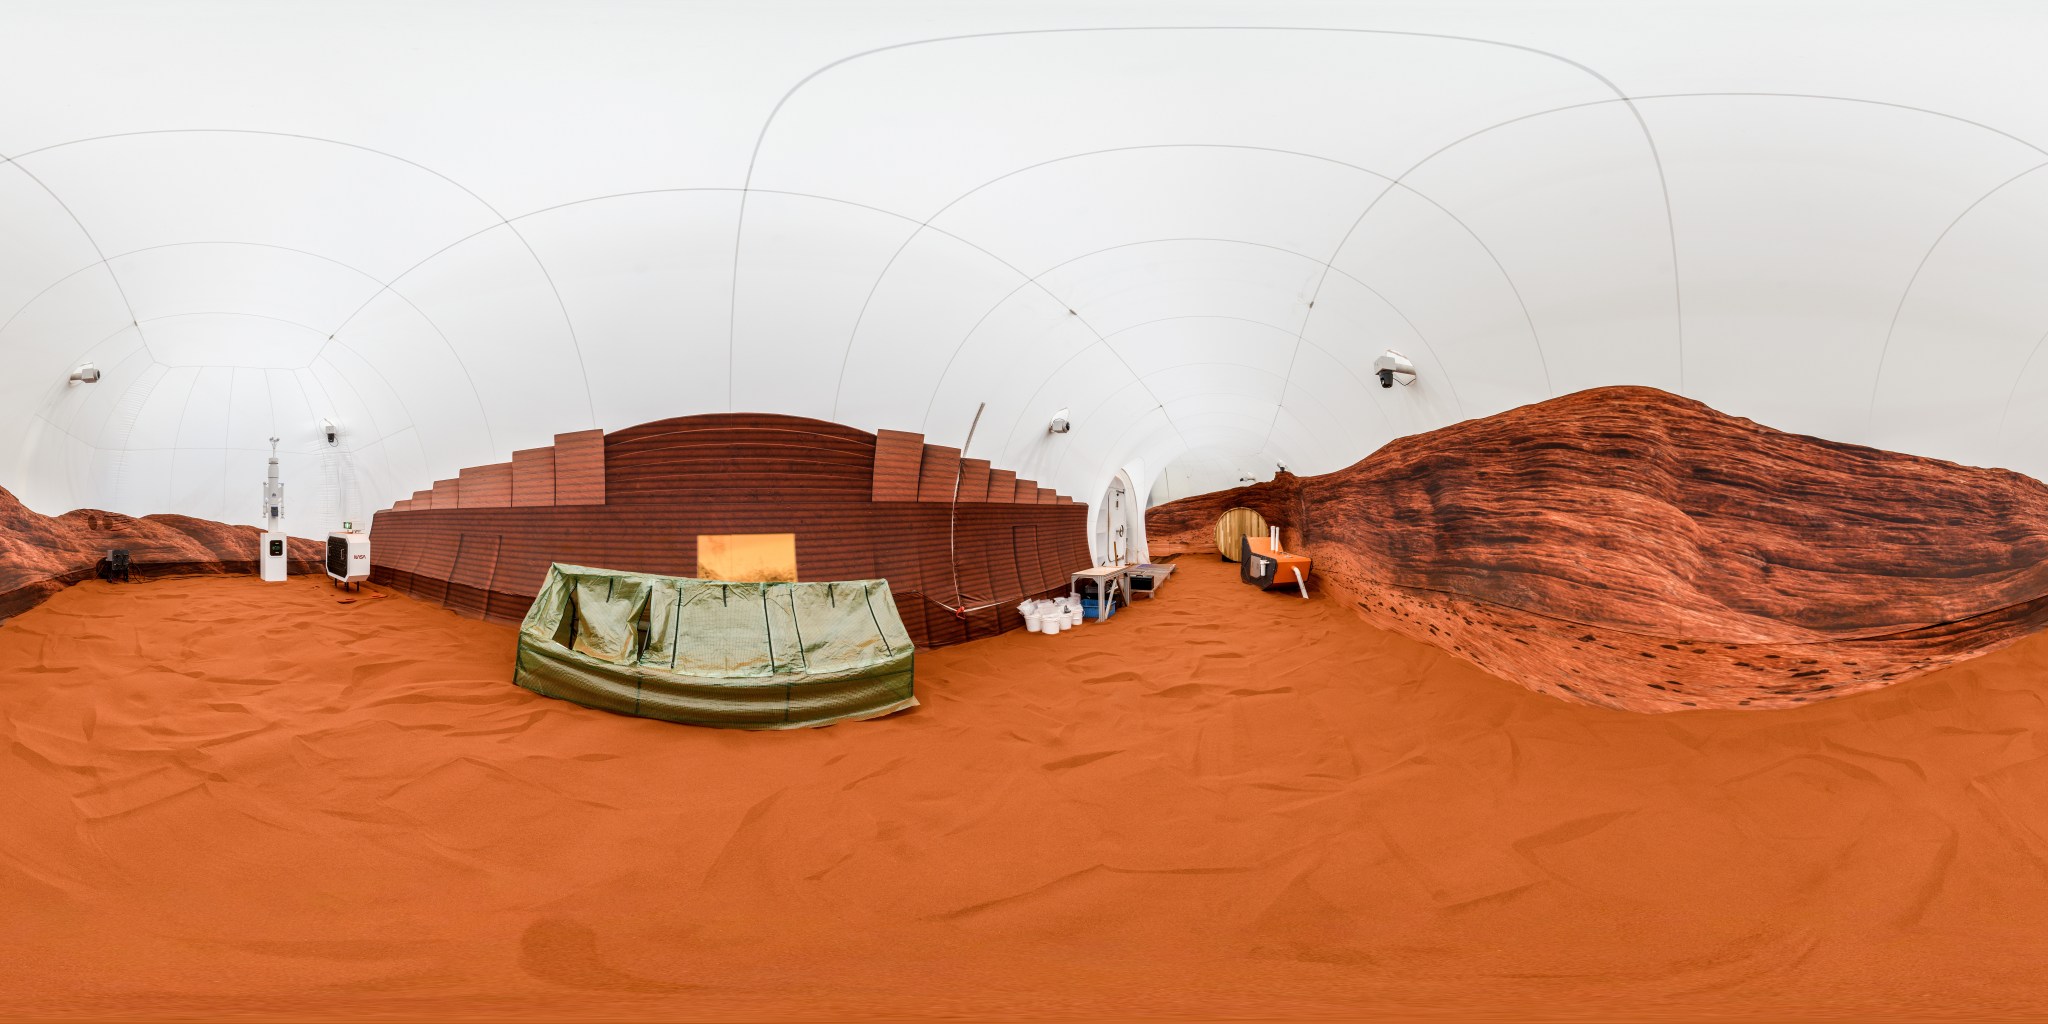 CHAPEA 360-degree view inside the sandbox